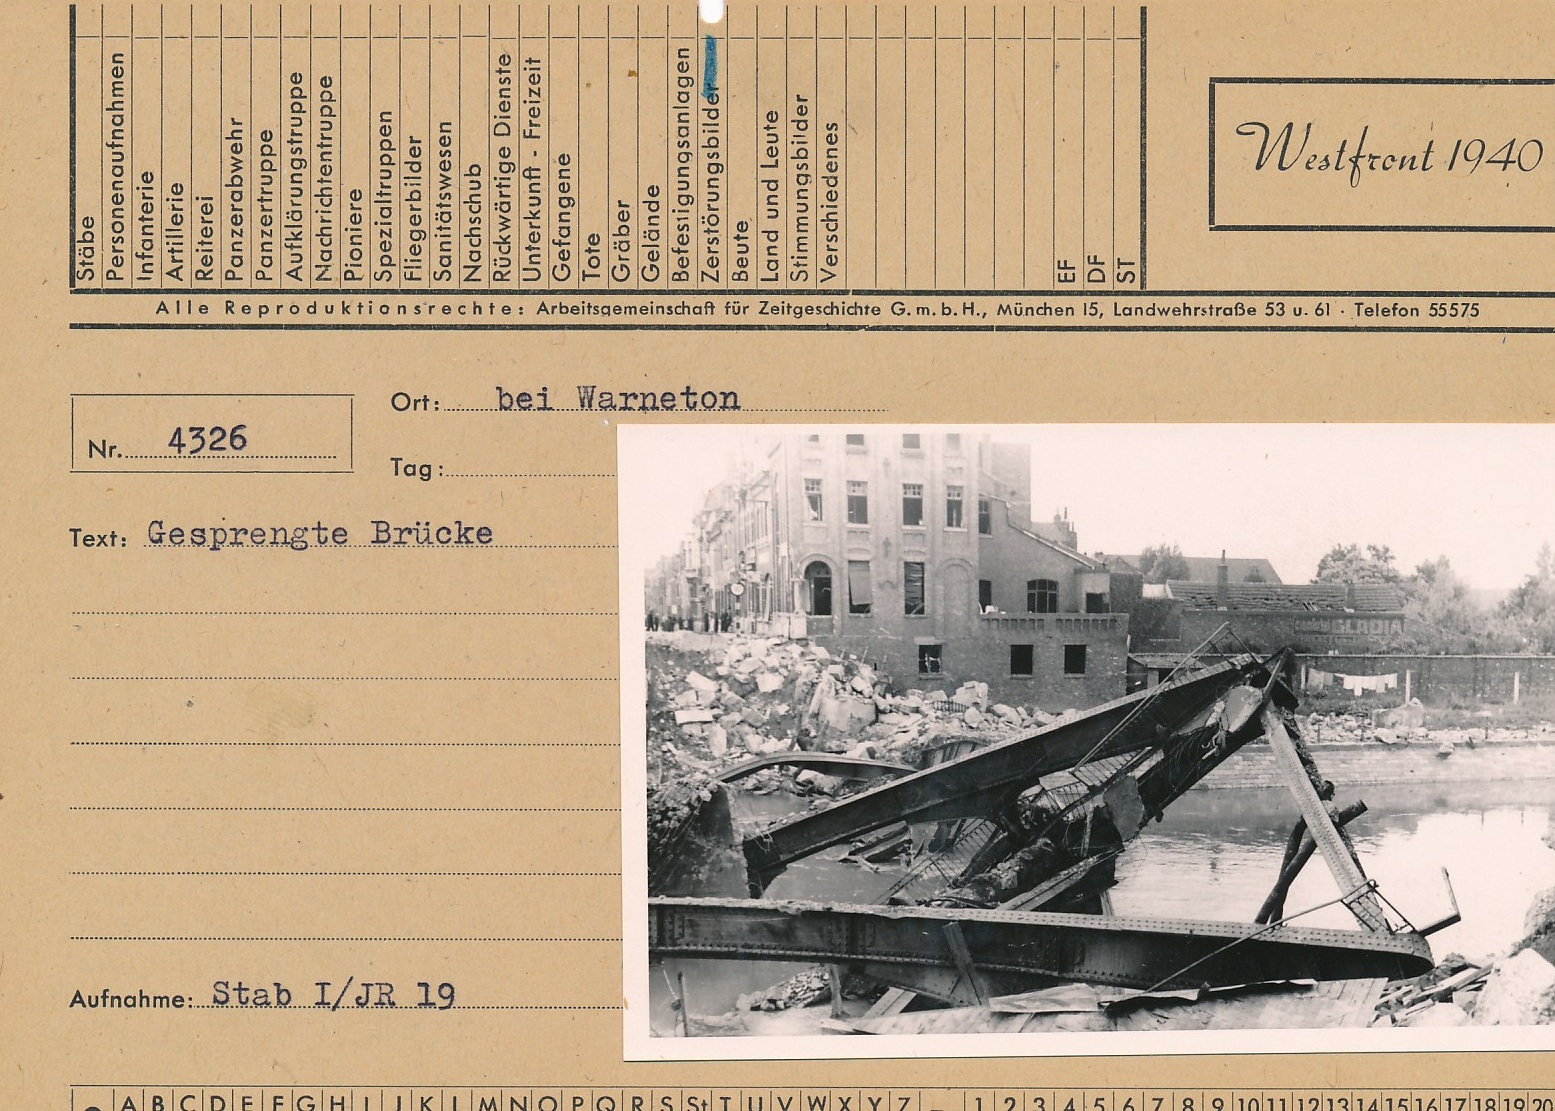 Westfront 1940, Photo with Descripton sheet, bei. Warneton.